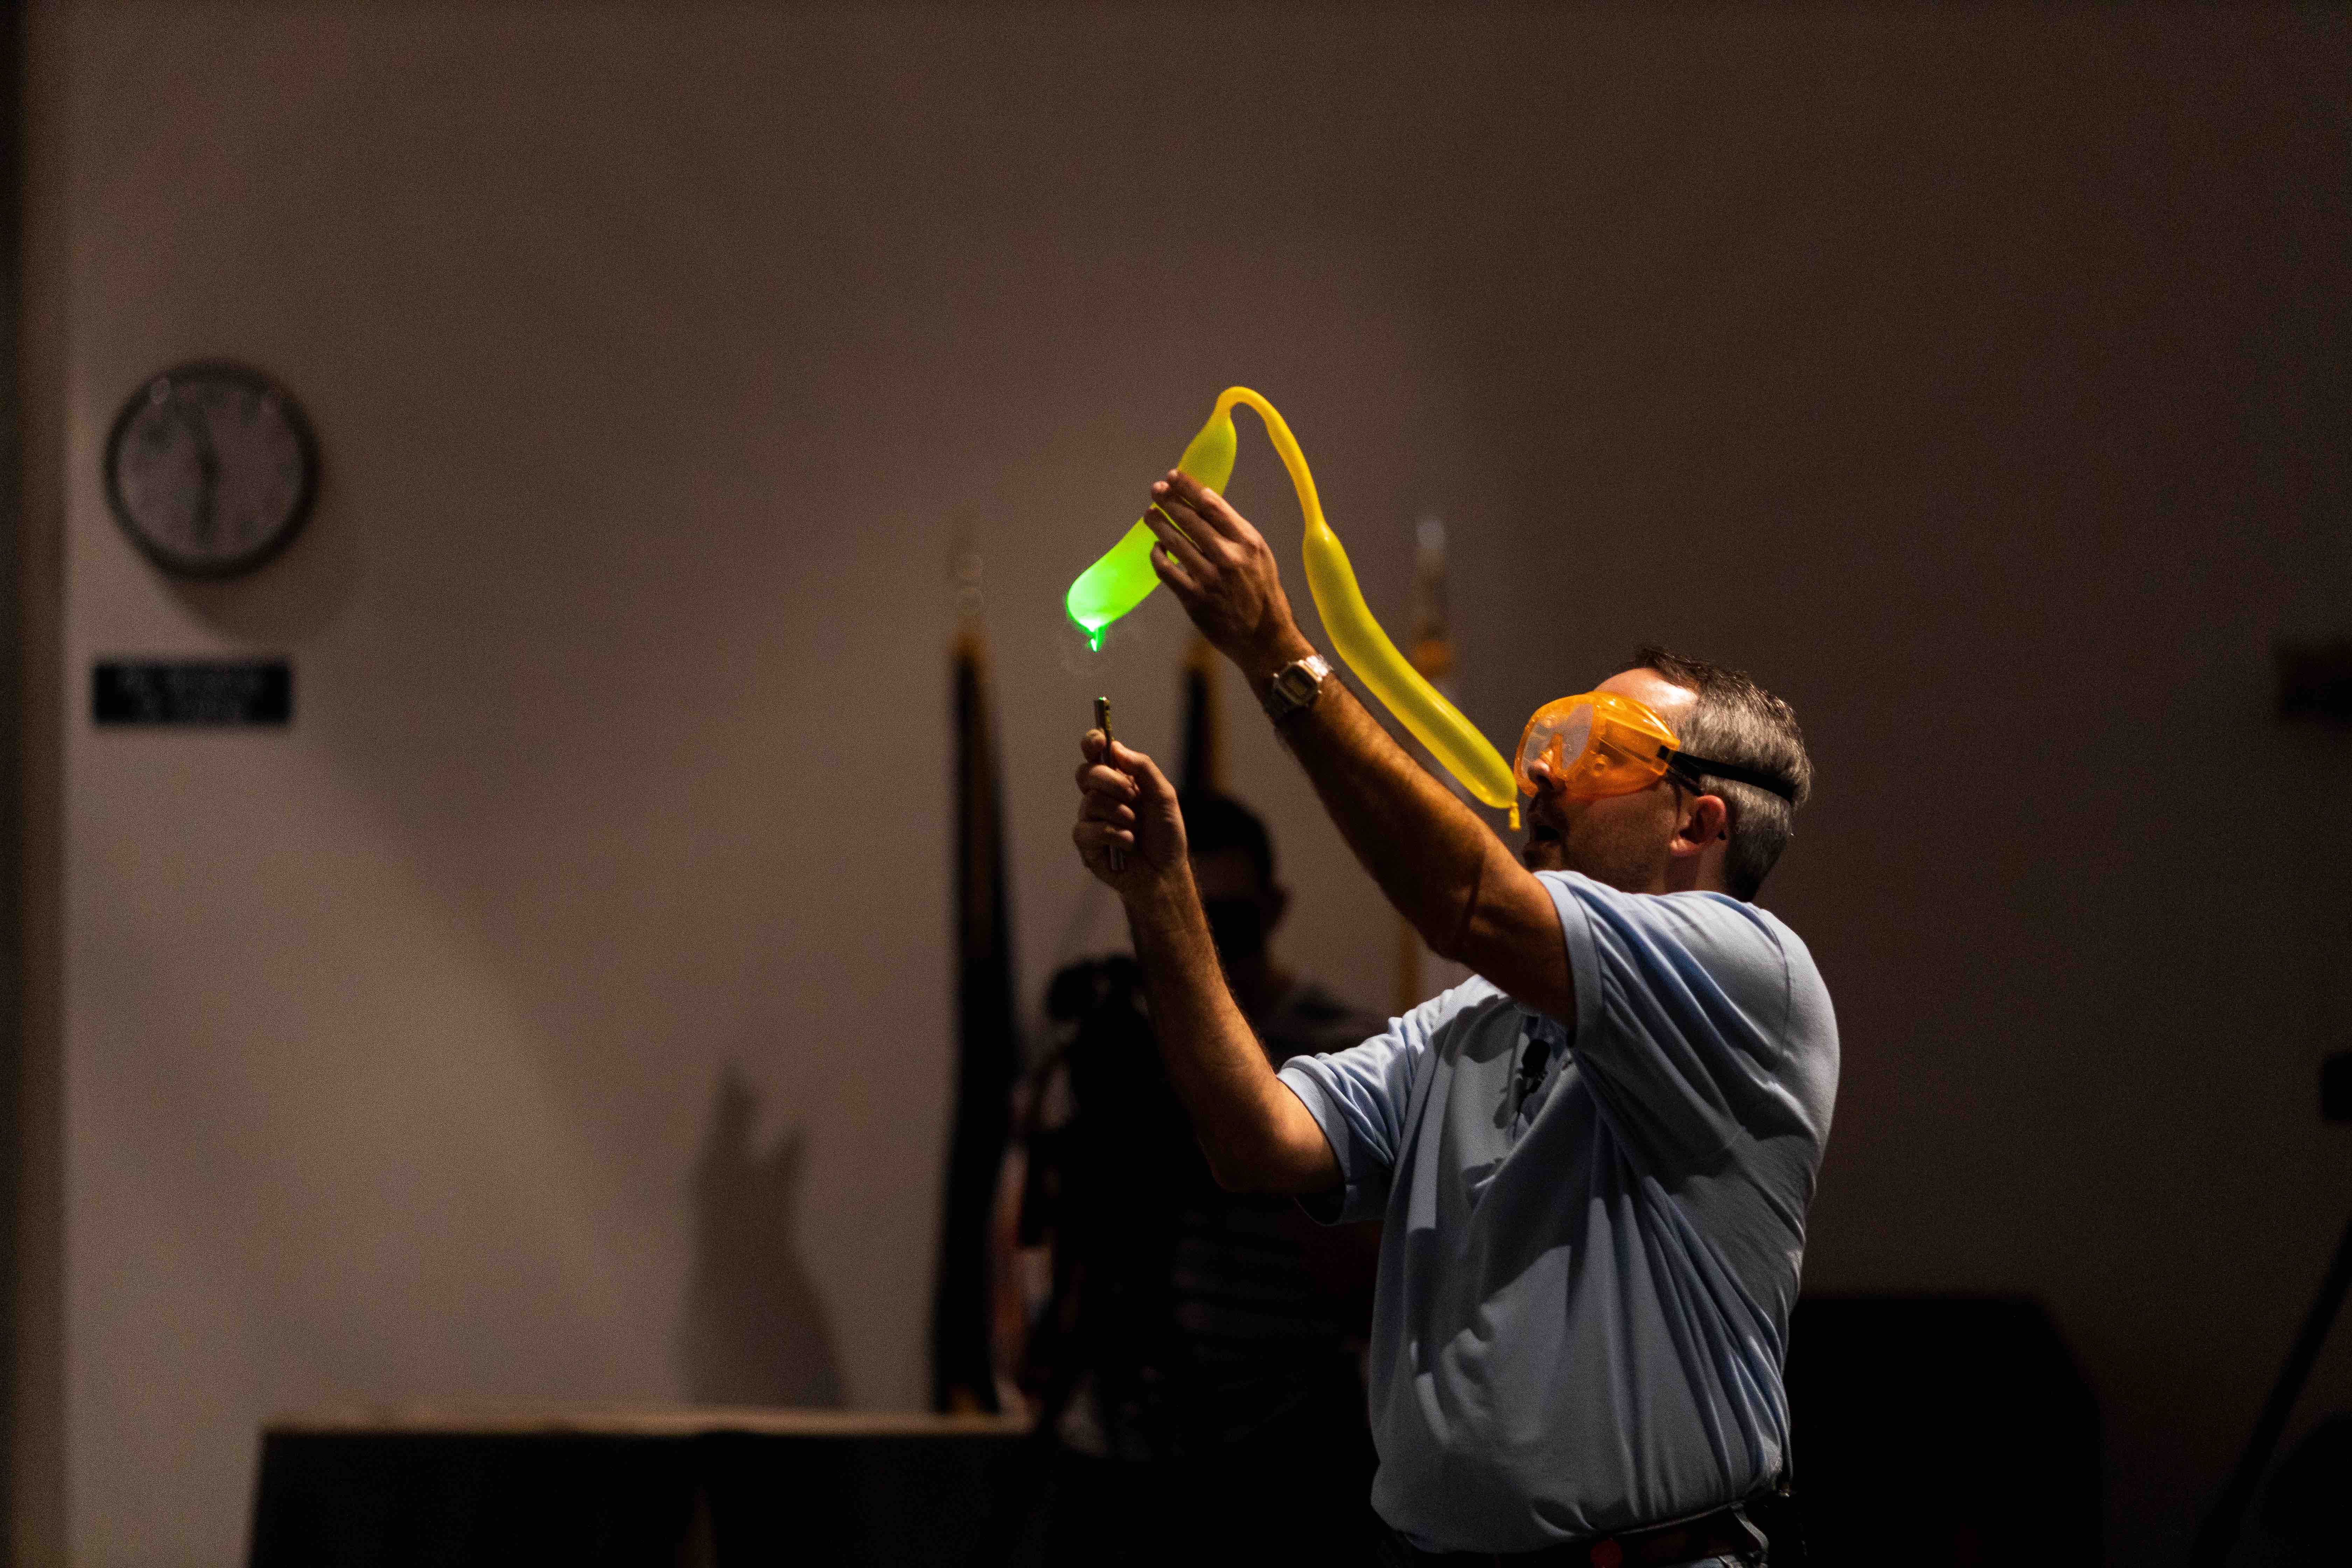 Steve Gagnon shows liquid air in a balloon that had been frozen using liquid nitrogen